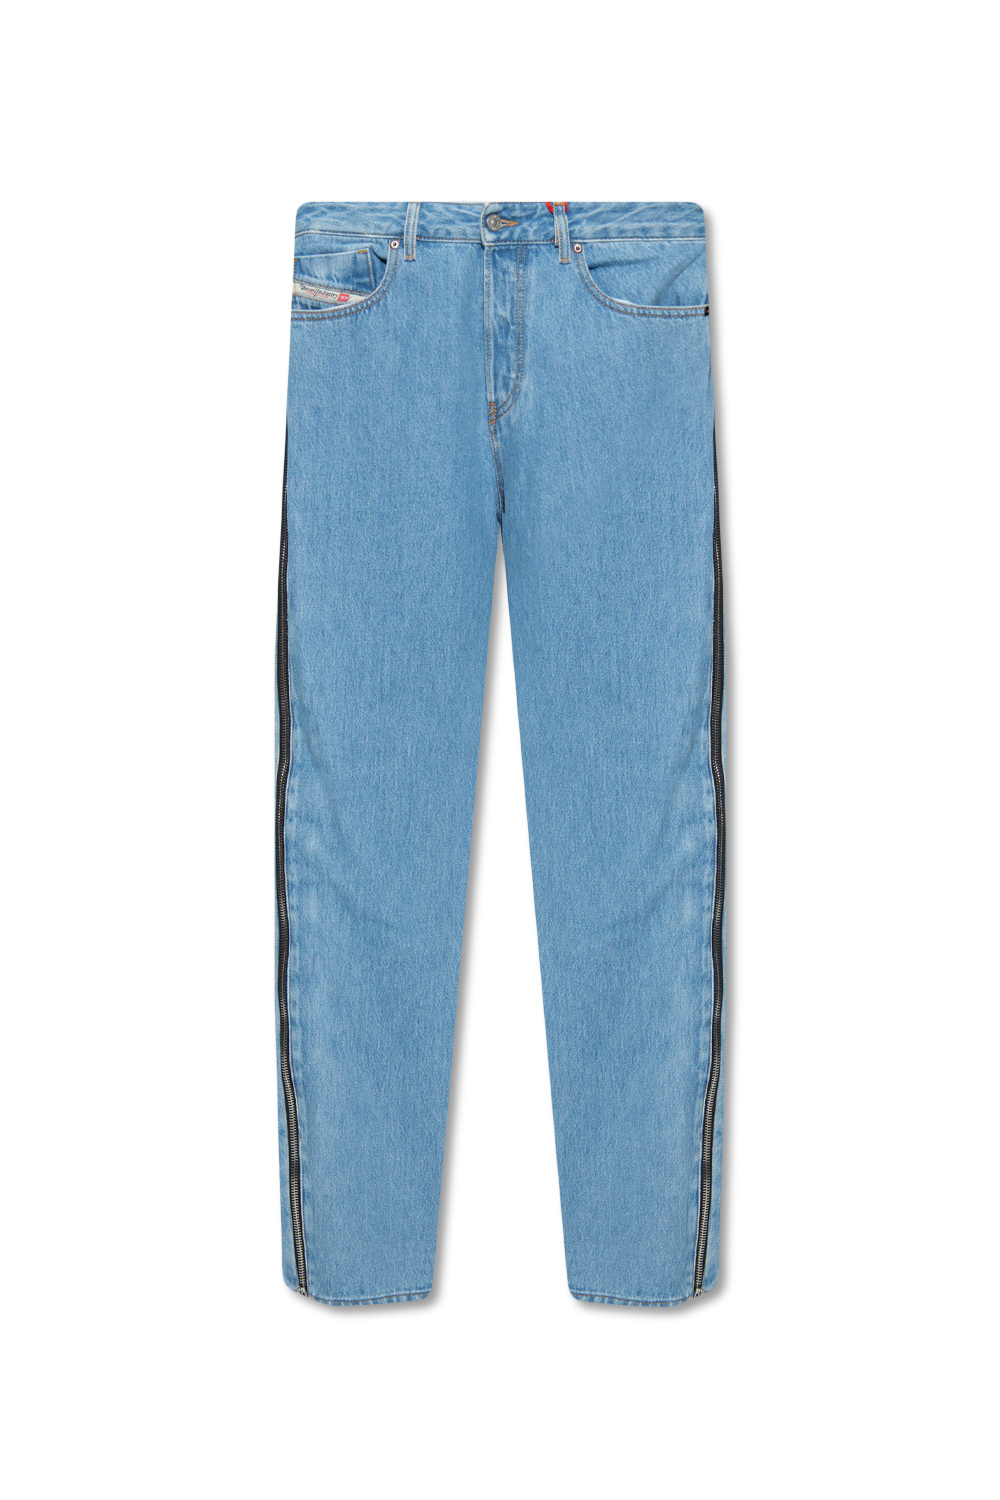 Diesel ‘1955’ jeans with side stripes